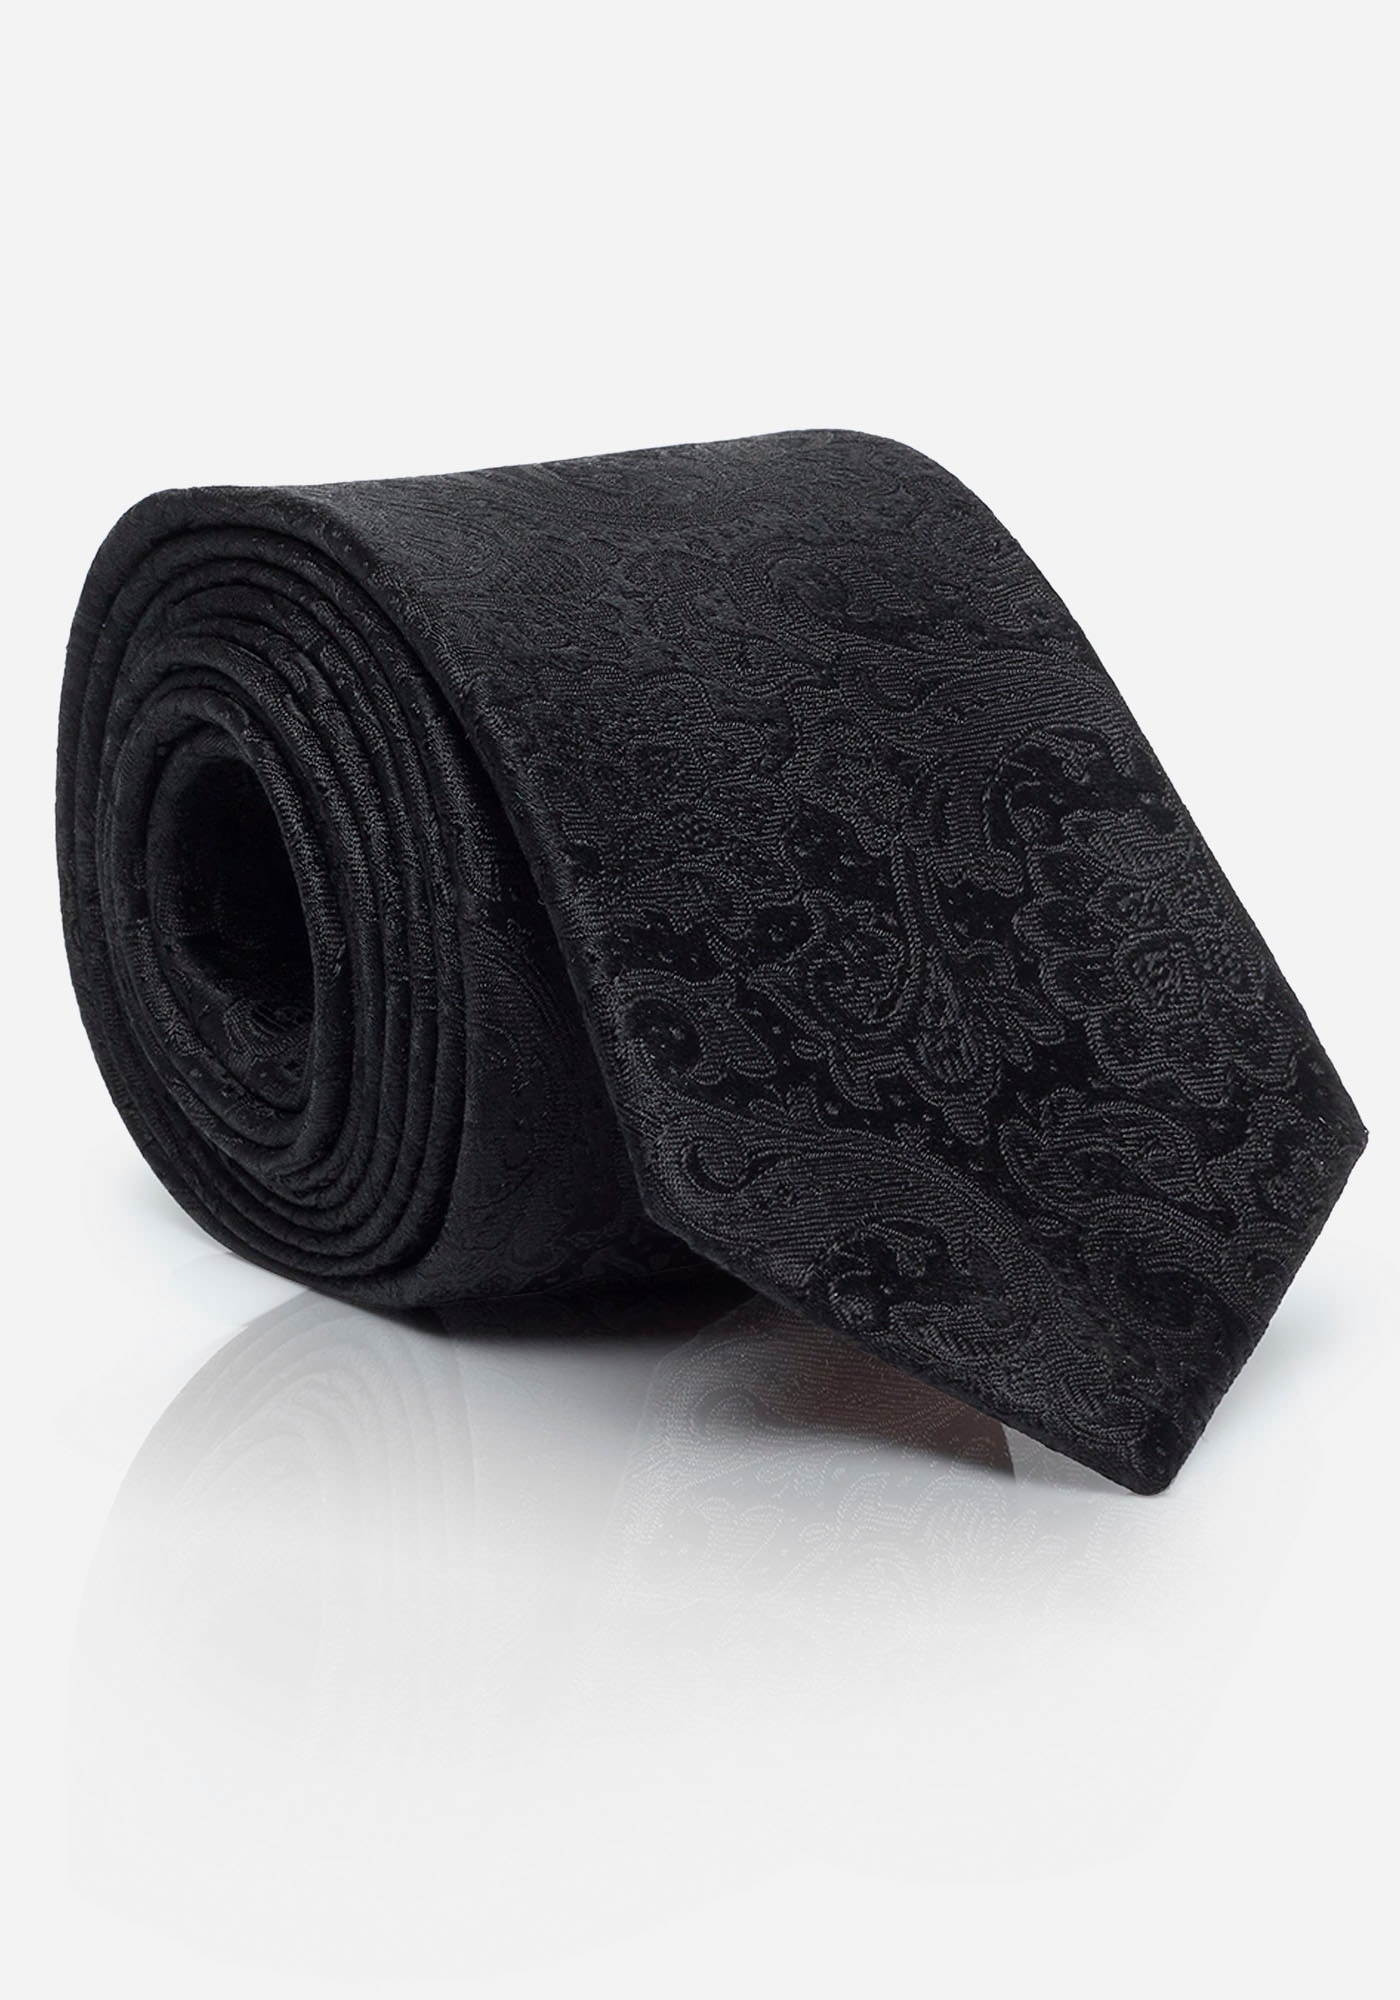 MONTI Krawatte »LUAN«, aus reiner Seide, Paisley-Muster